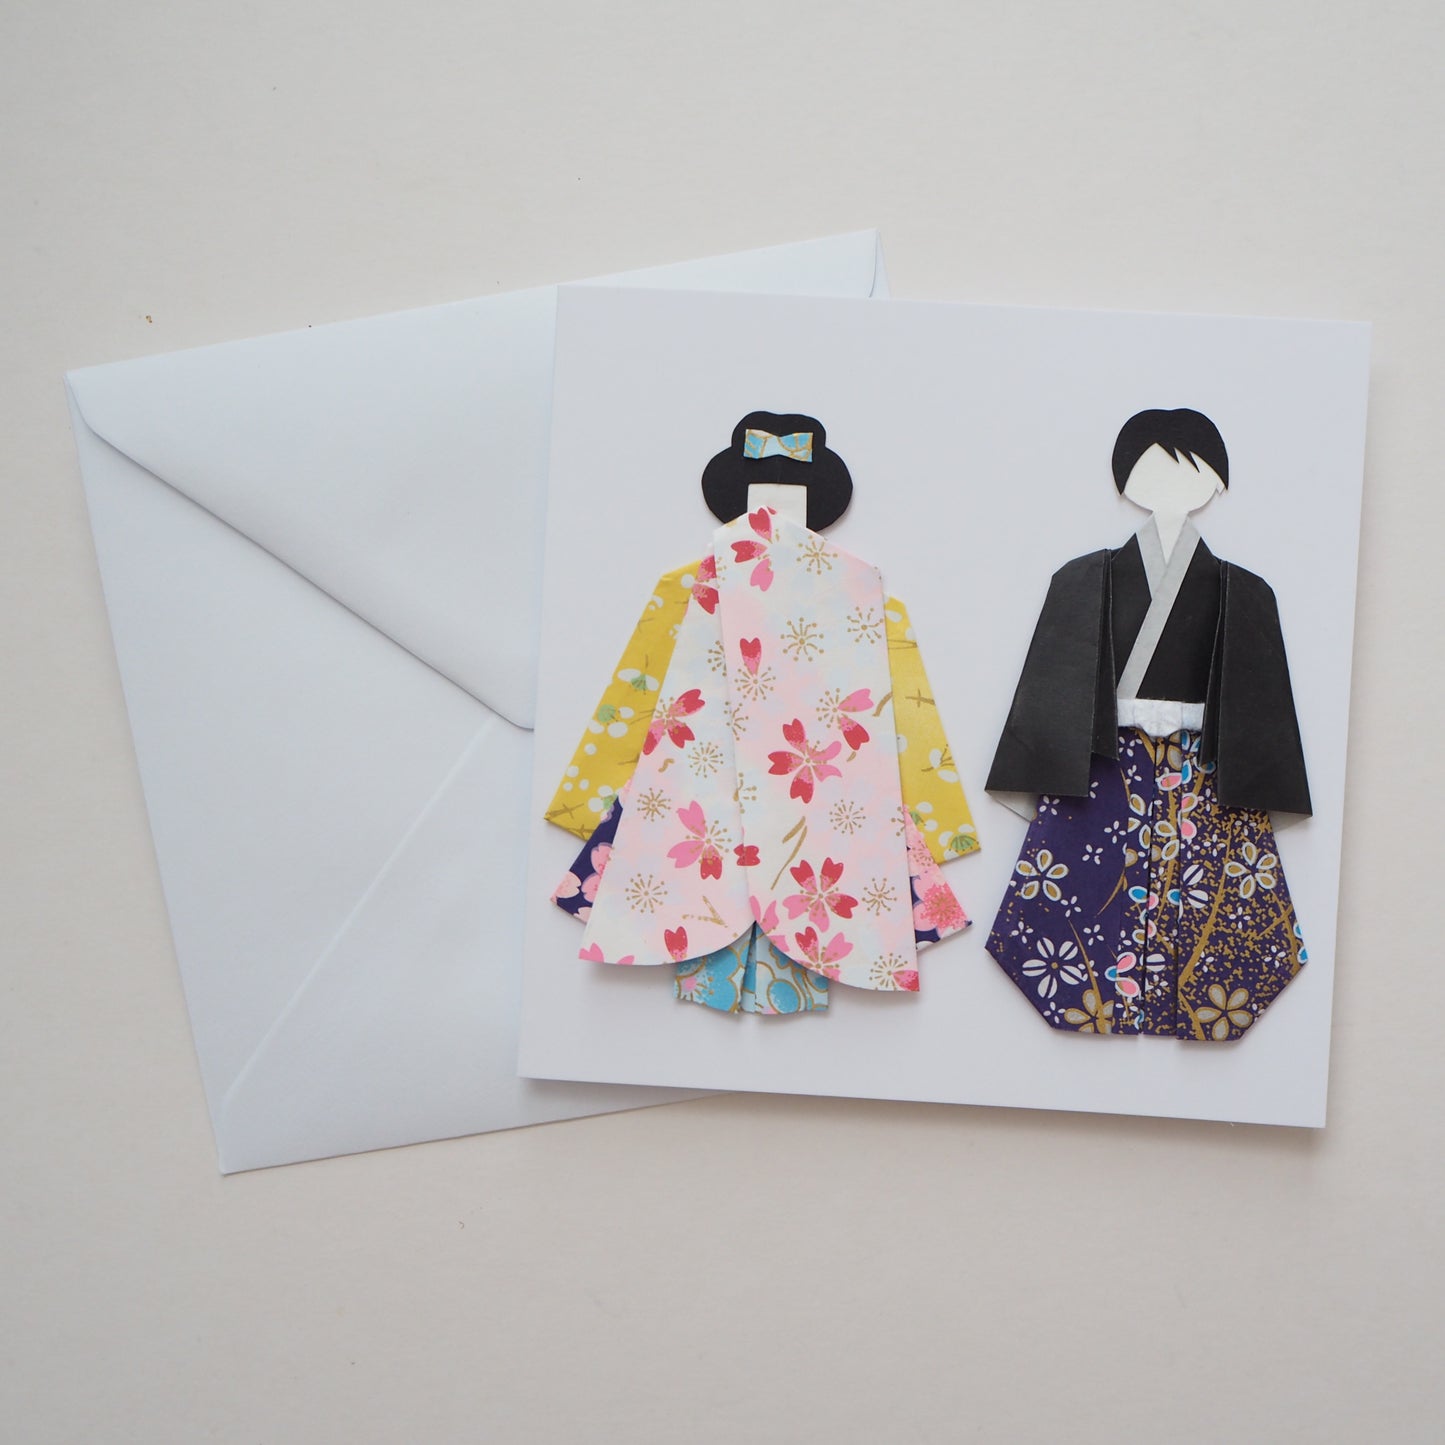 Customisable Handmade Origami Wedding Card - Floral Romance